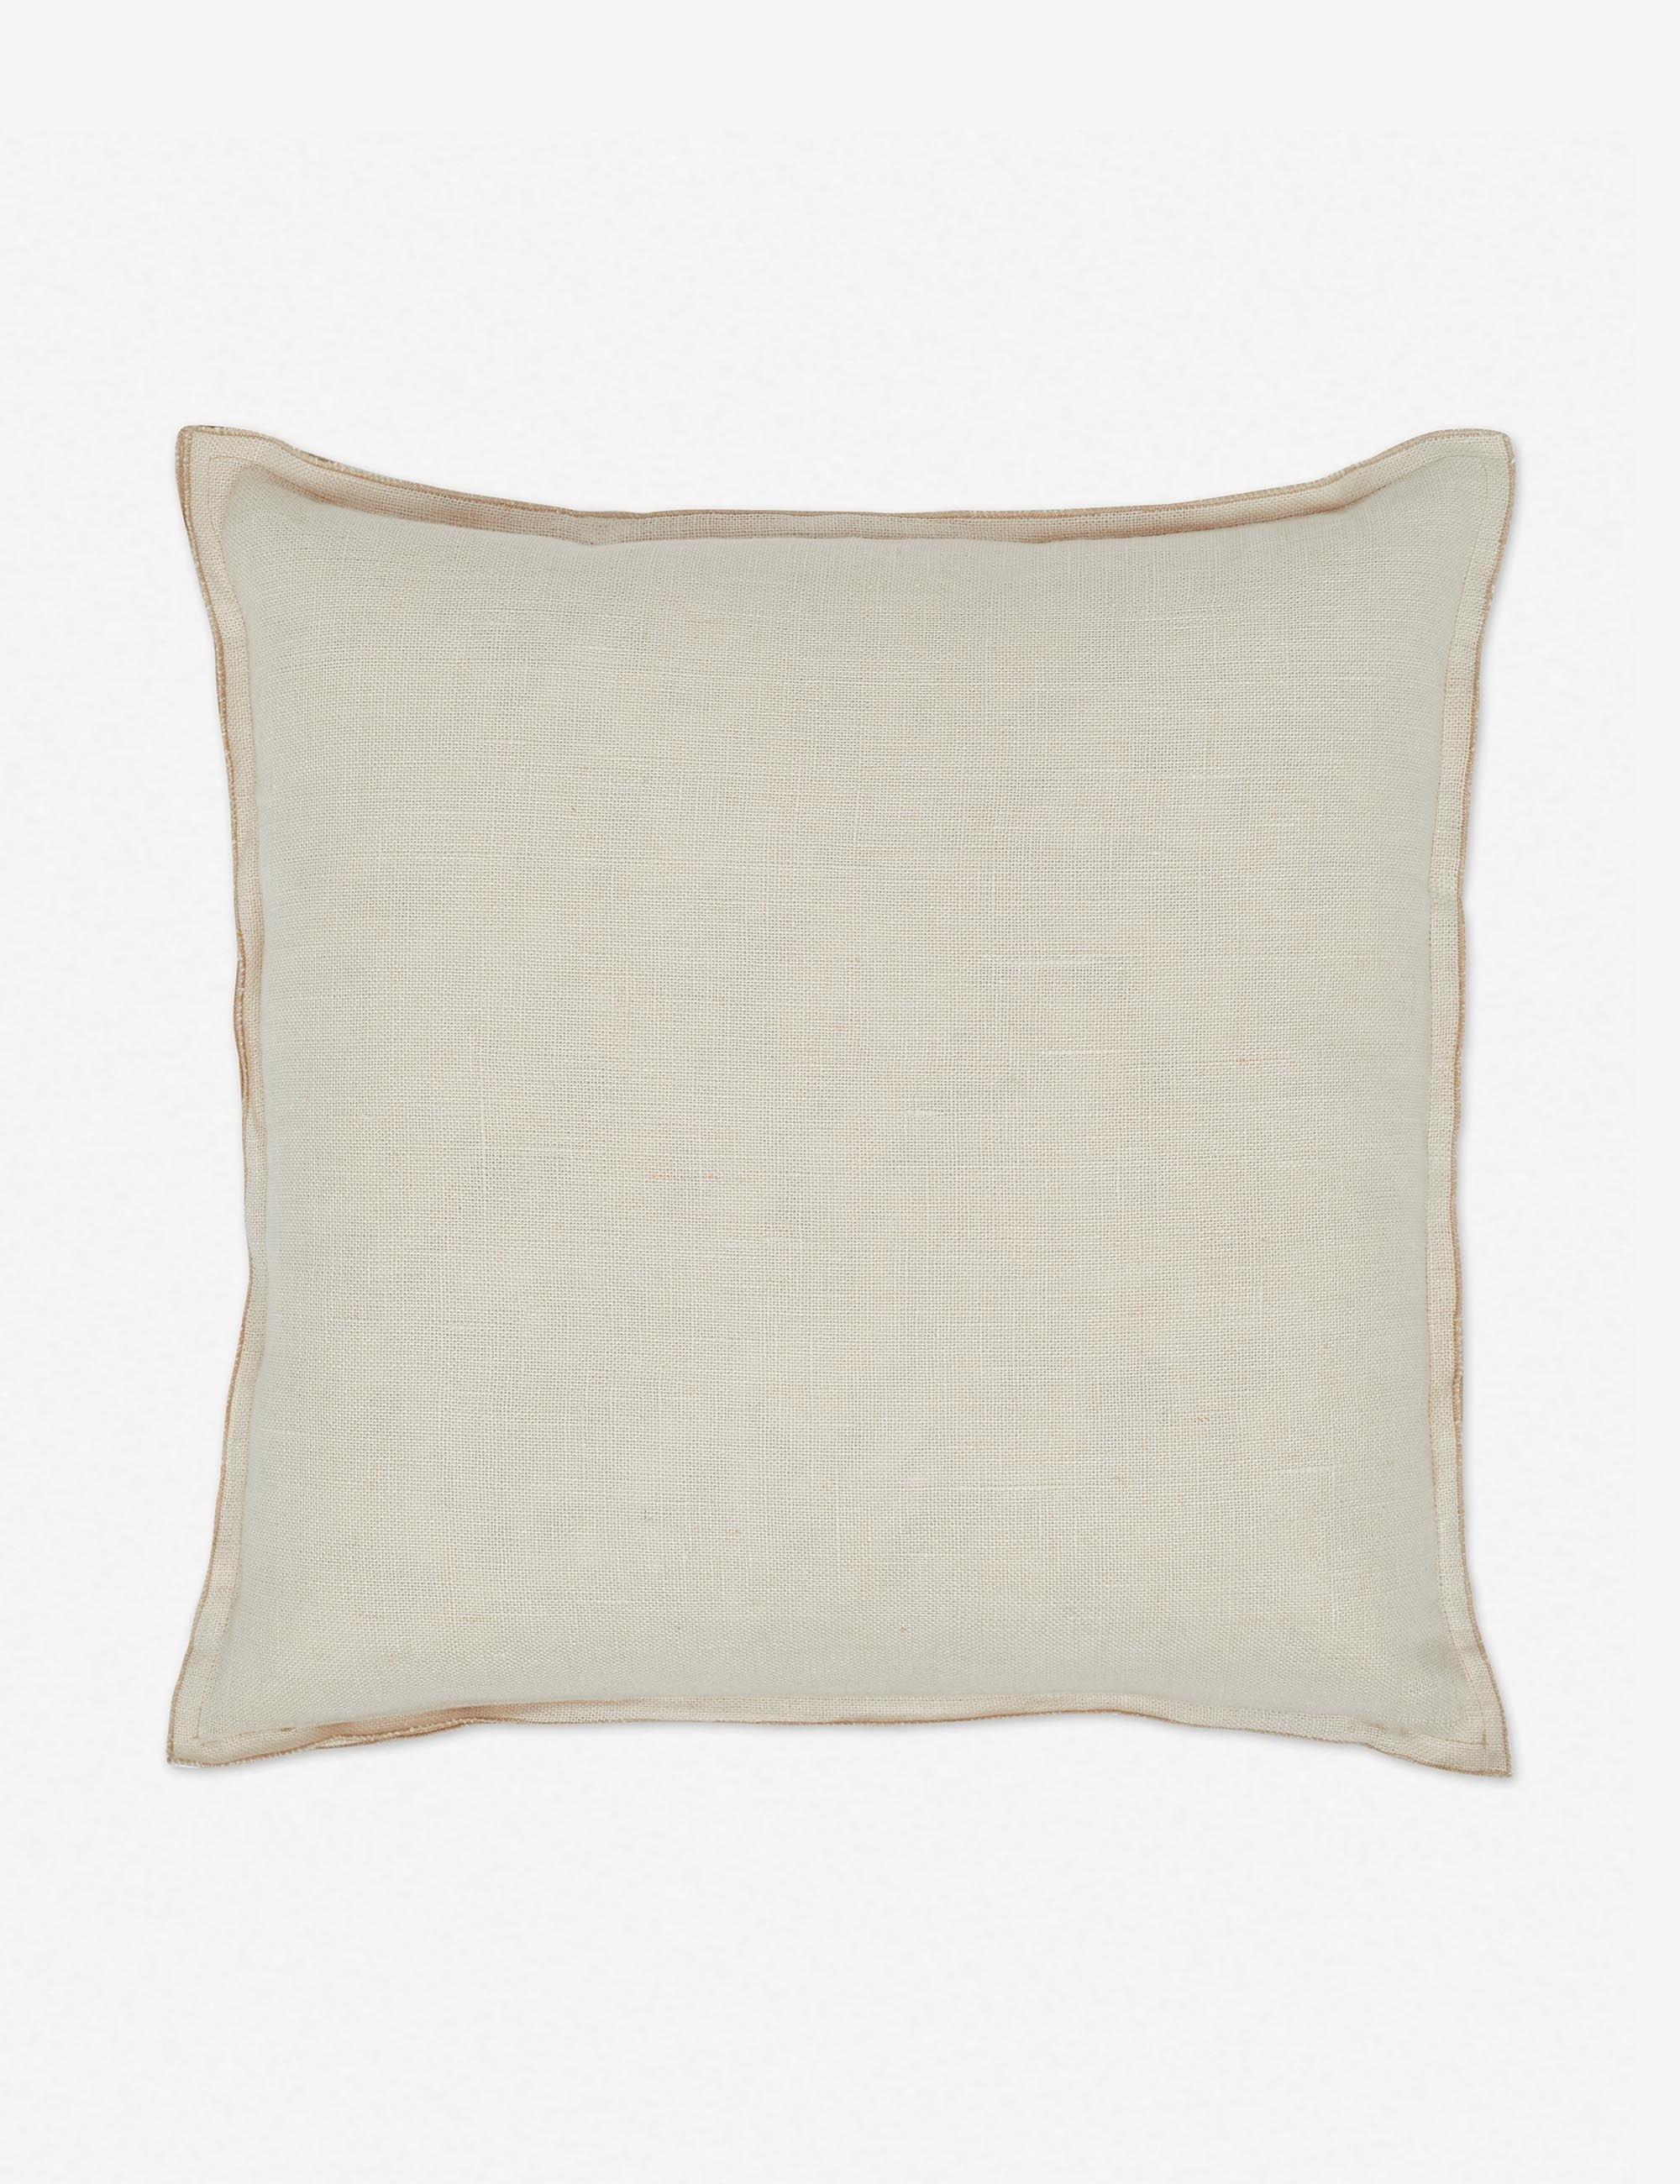 Arlo Linen Pillow, Light Natural - Image 0